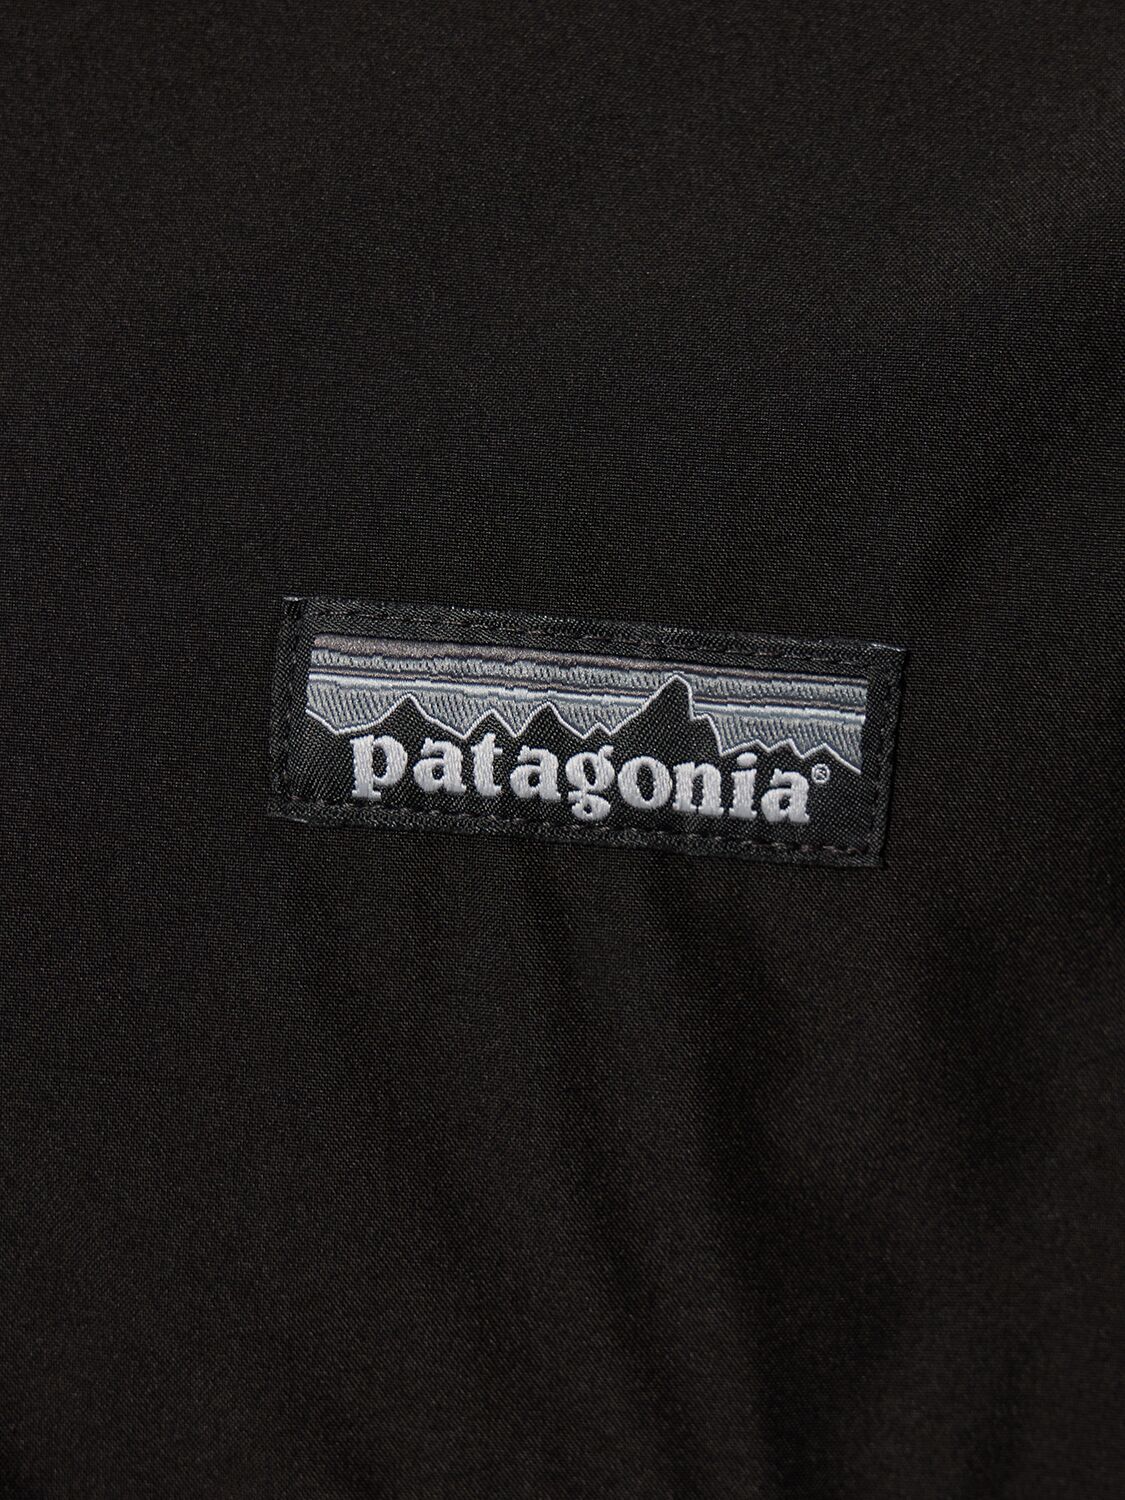 Patagonia Stormshadow Down Parka